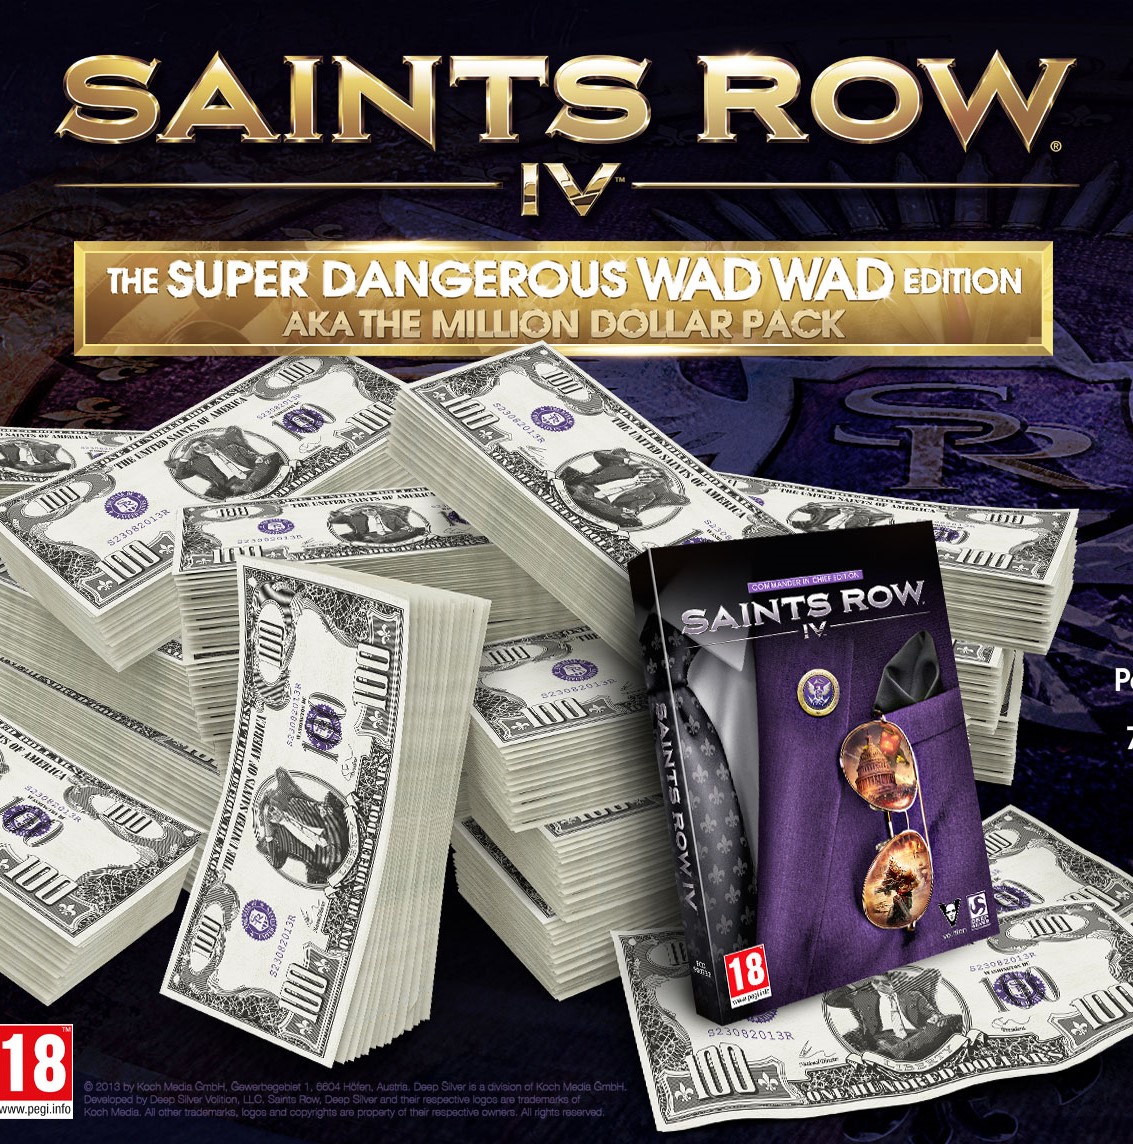 Ludicrous $1 million 'Saints Row IV' special edition includes